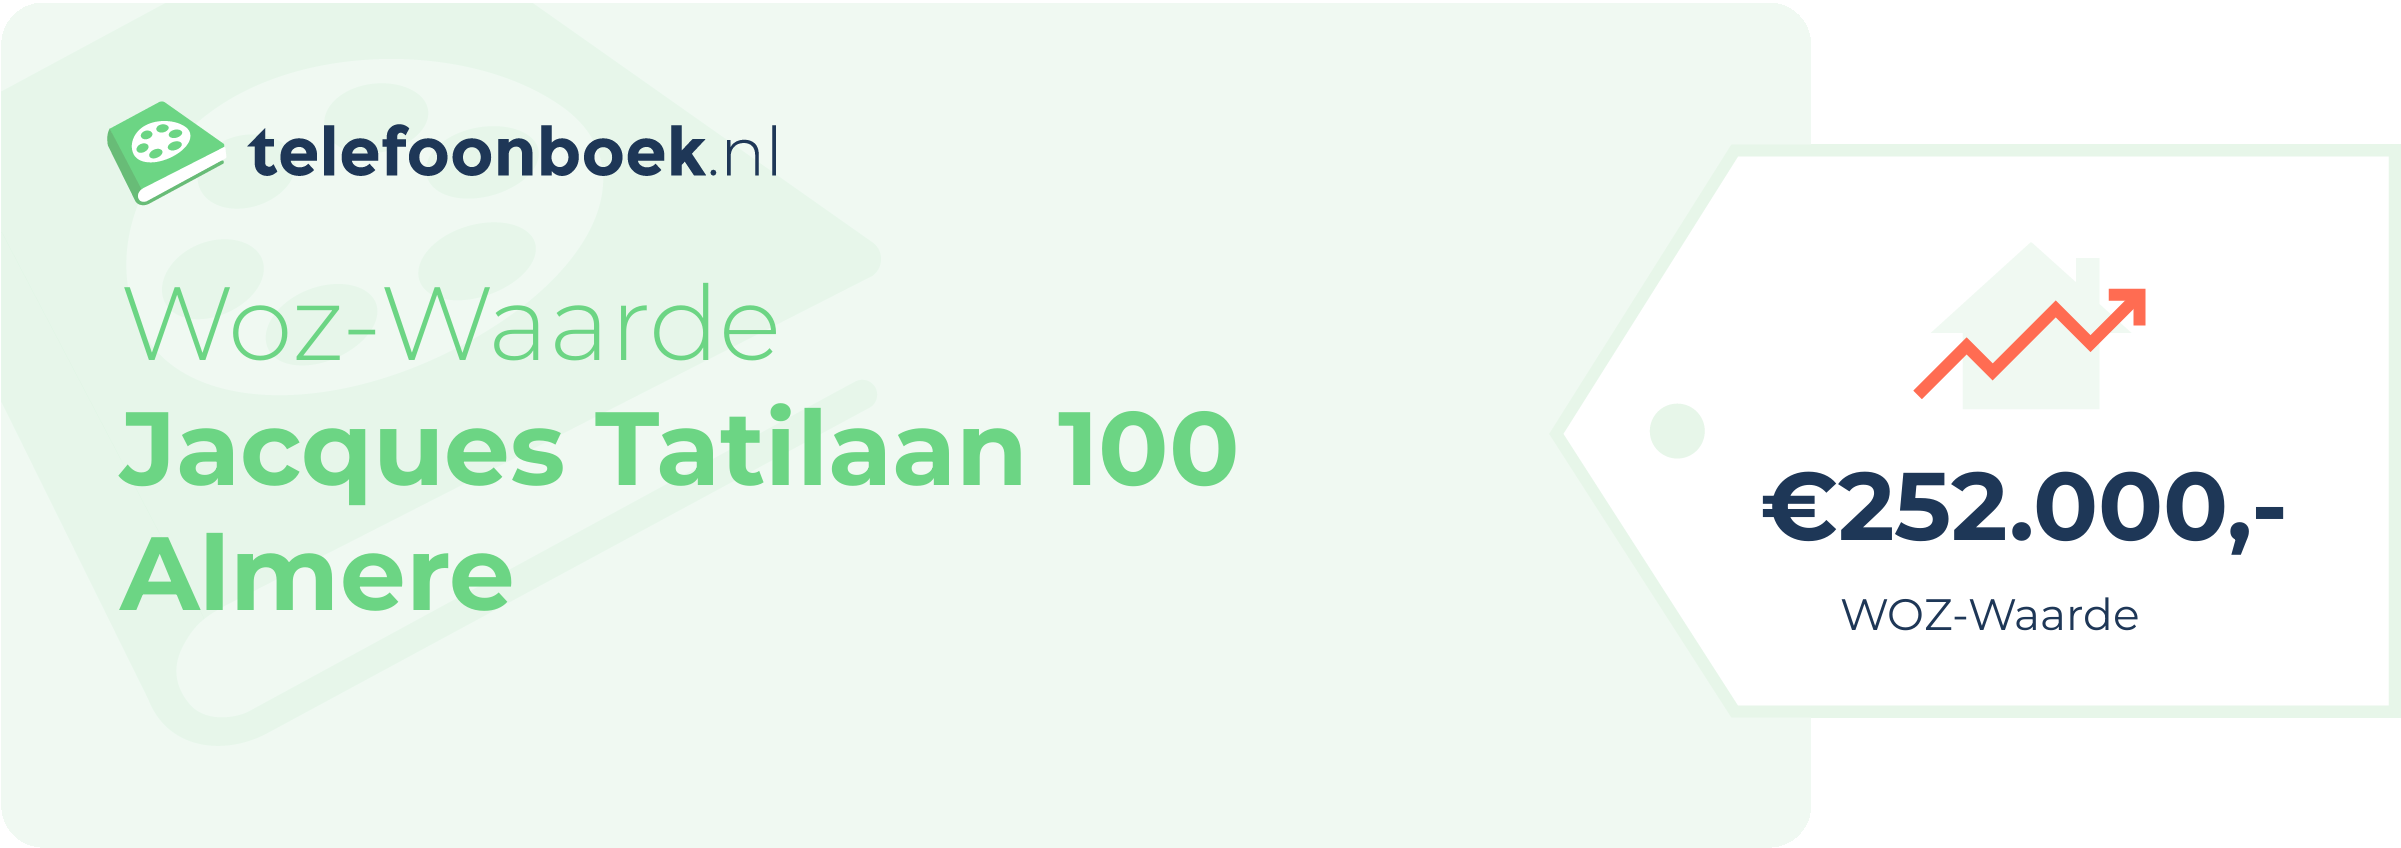 WOZ-waarde Jacques Tatilaan 100 Almere